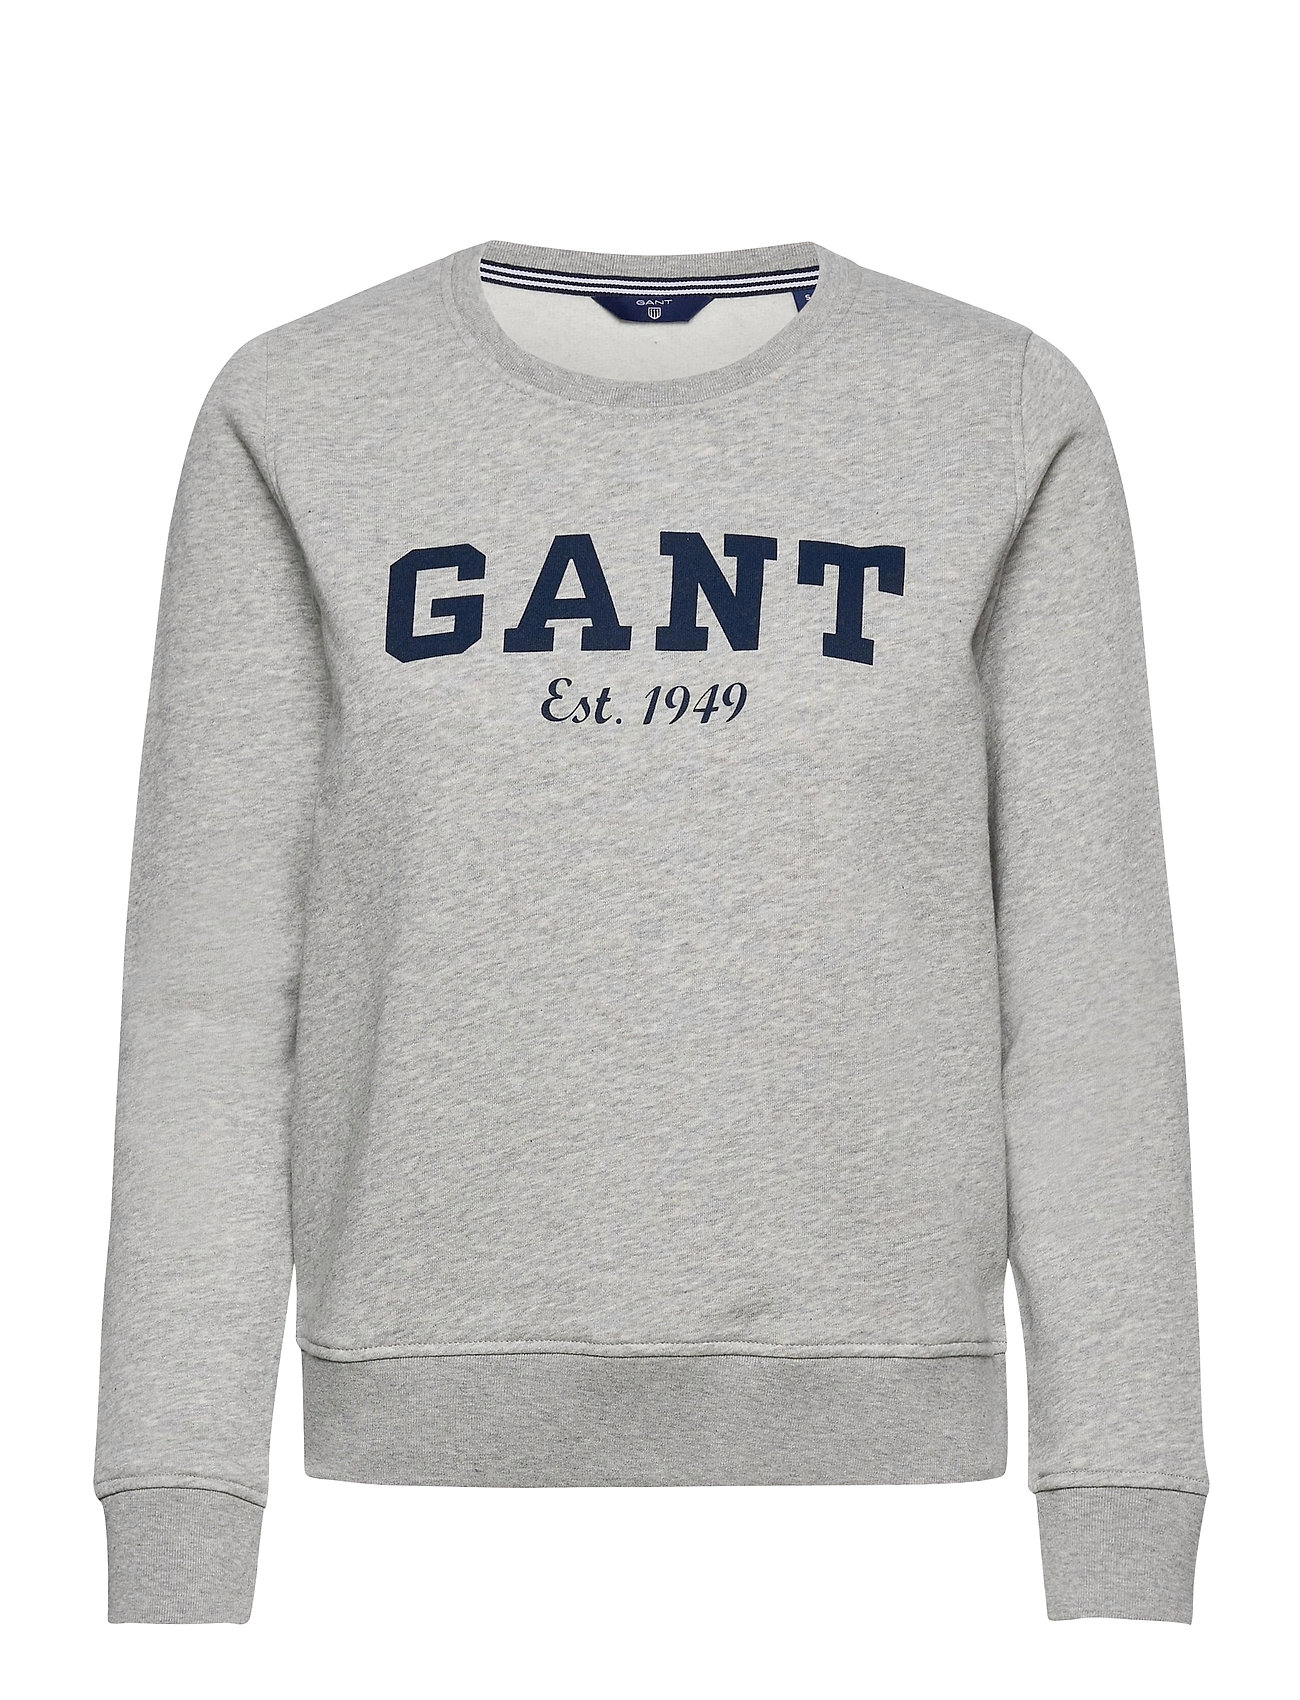 GANT Gant C-Neck Sweat Sweatshirt Trøje Grå GANT sweatshirts for dame - Pashion.dk